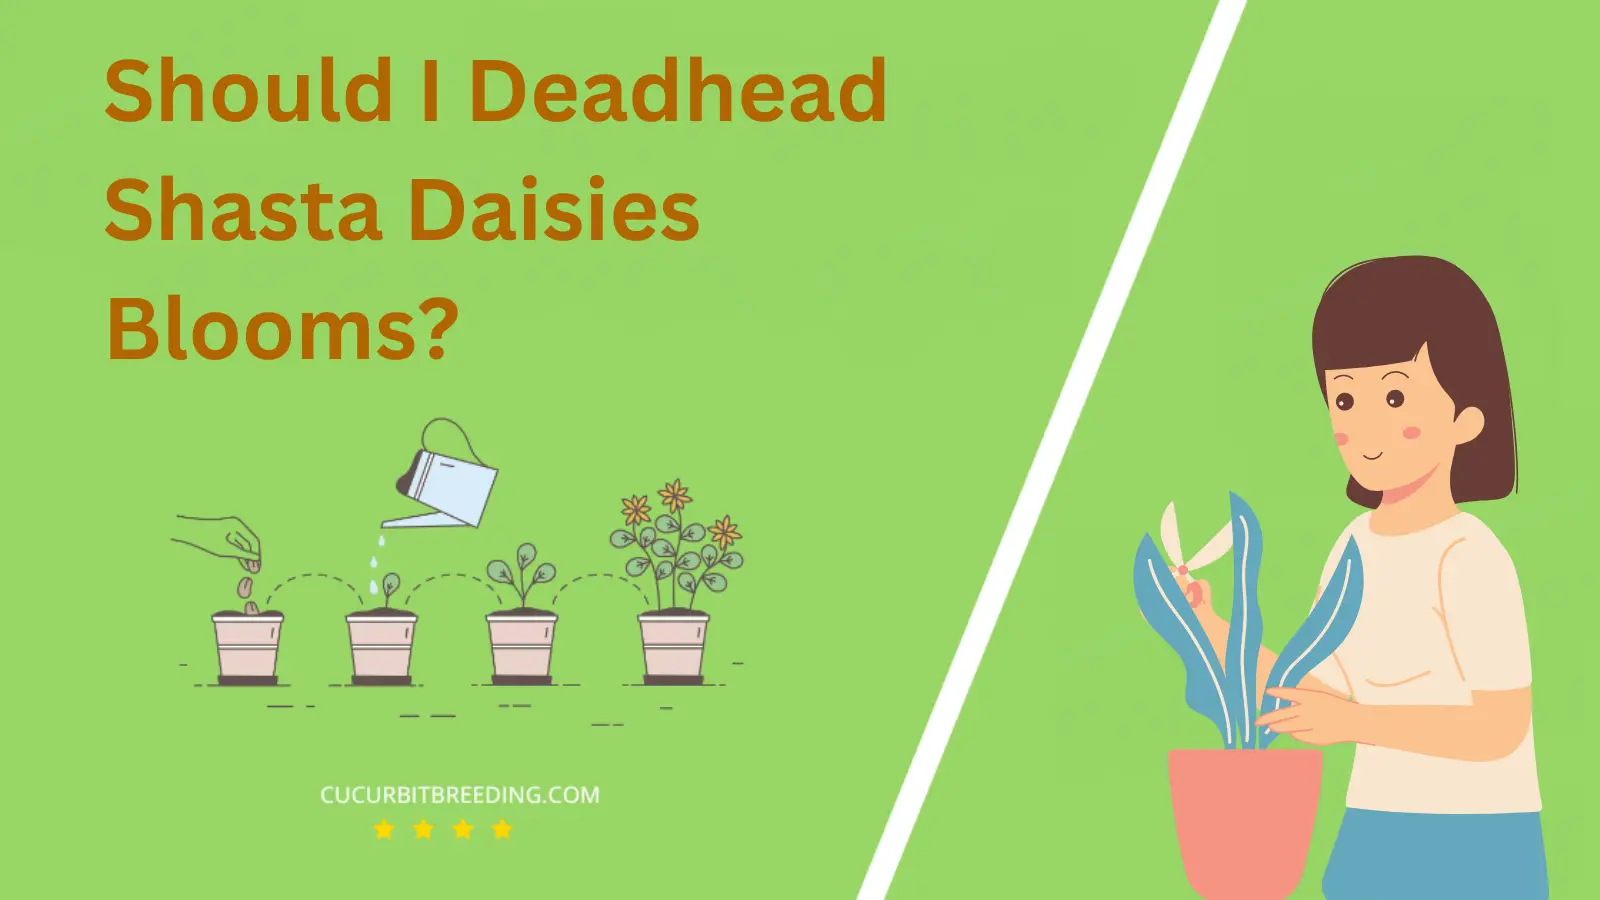 Should I Deadhead Shasta Daisies Blooms?